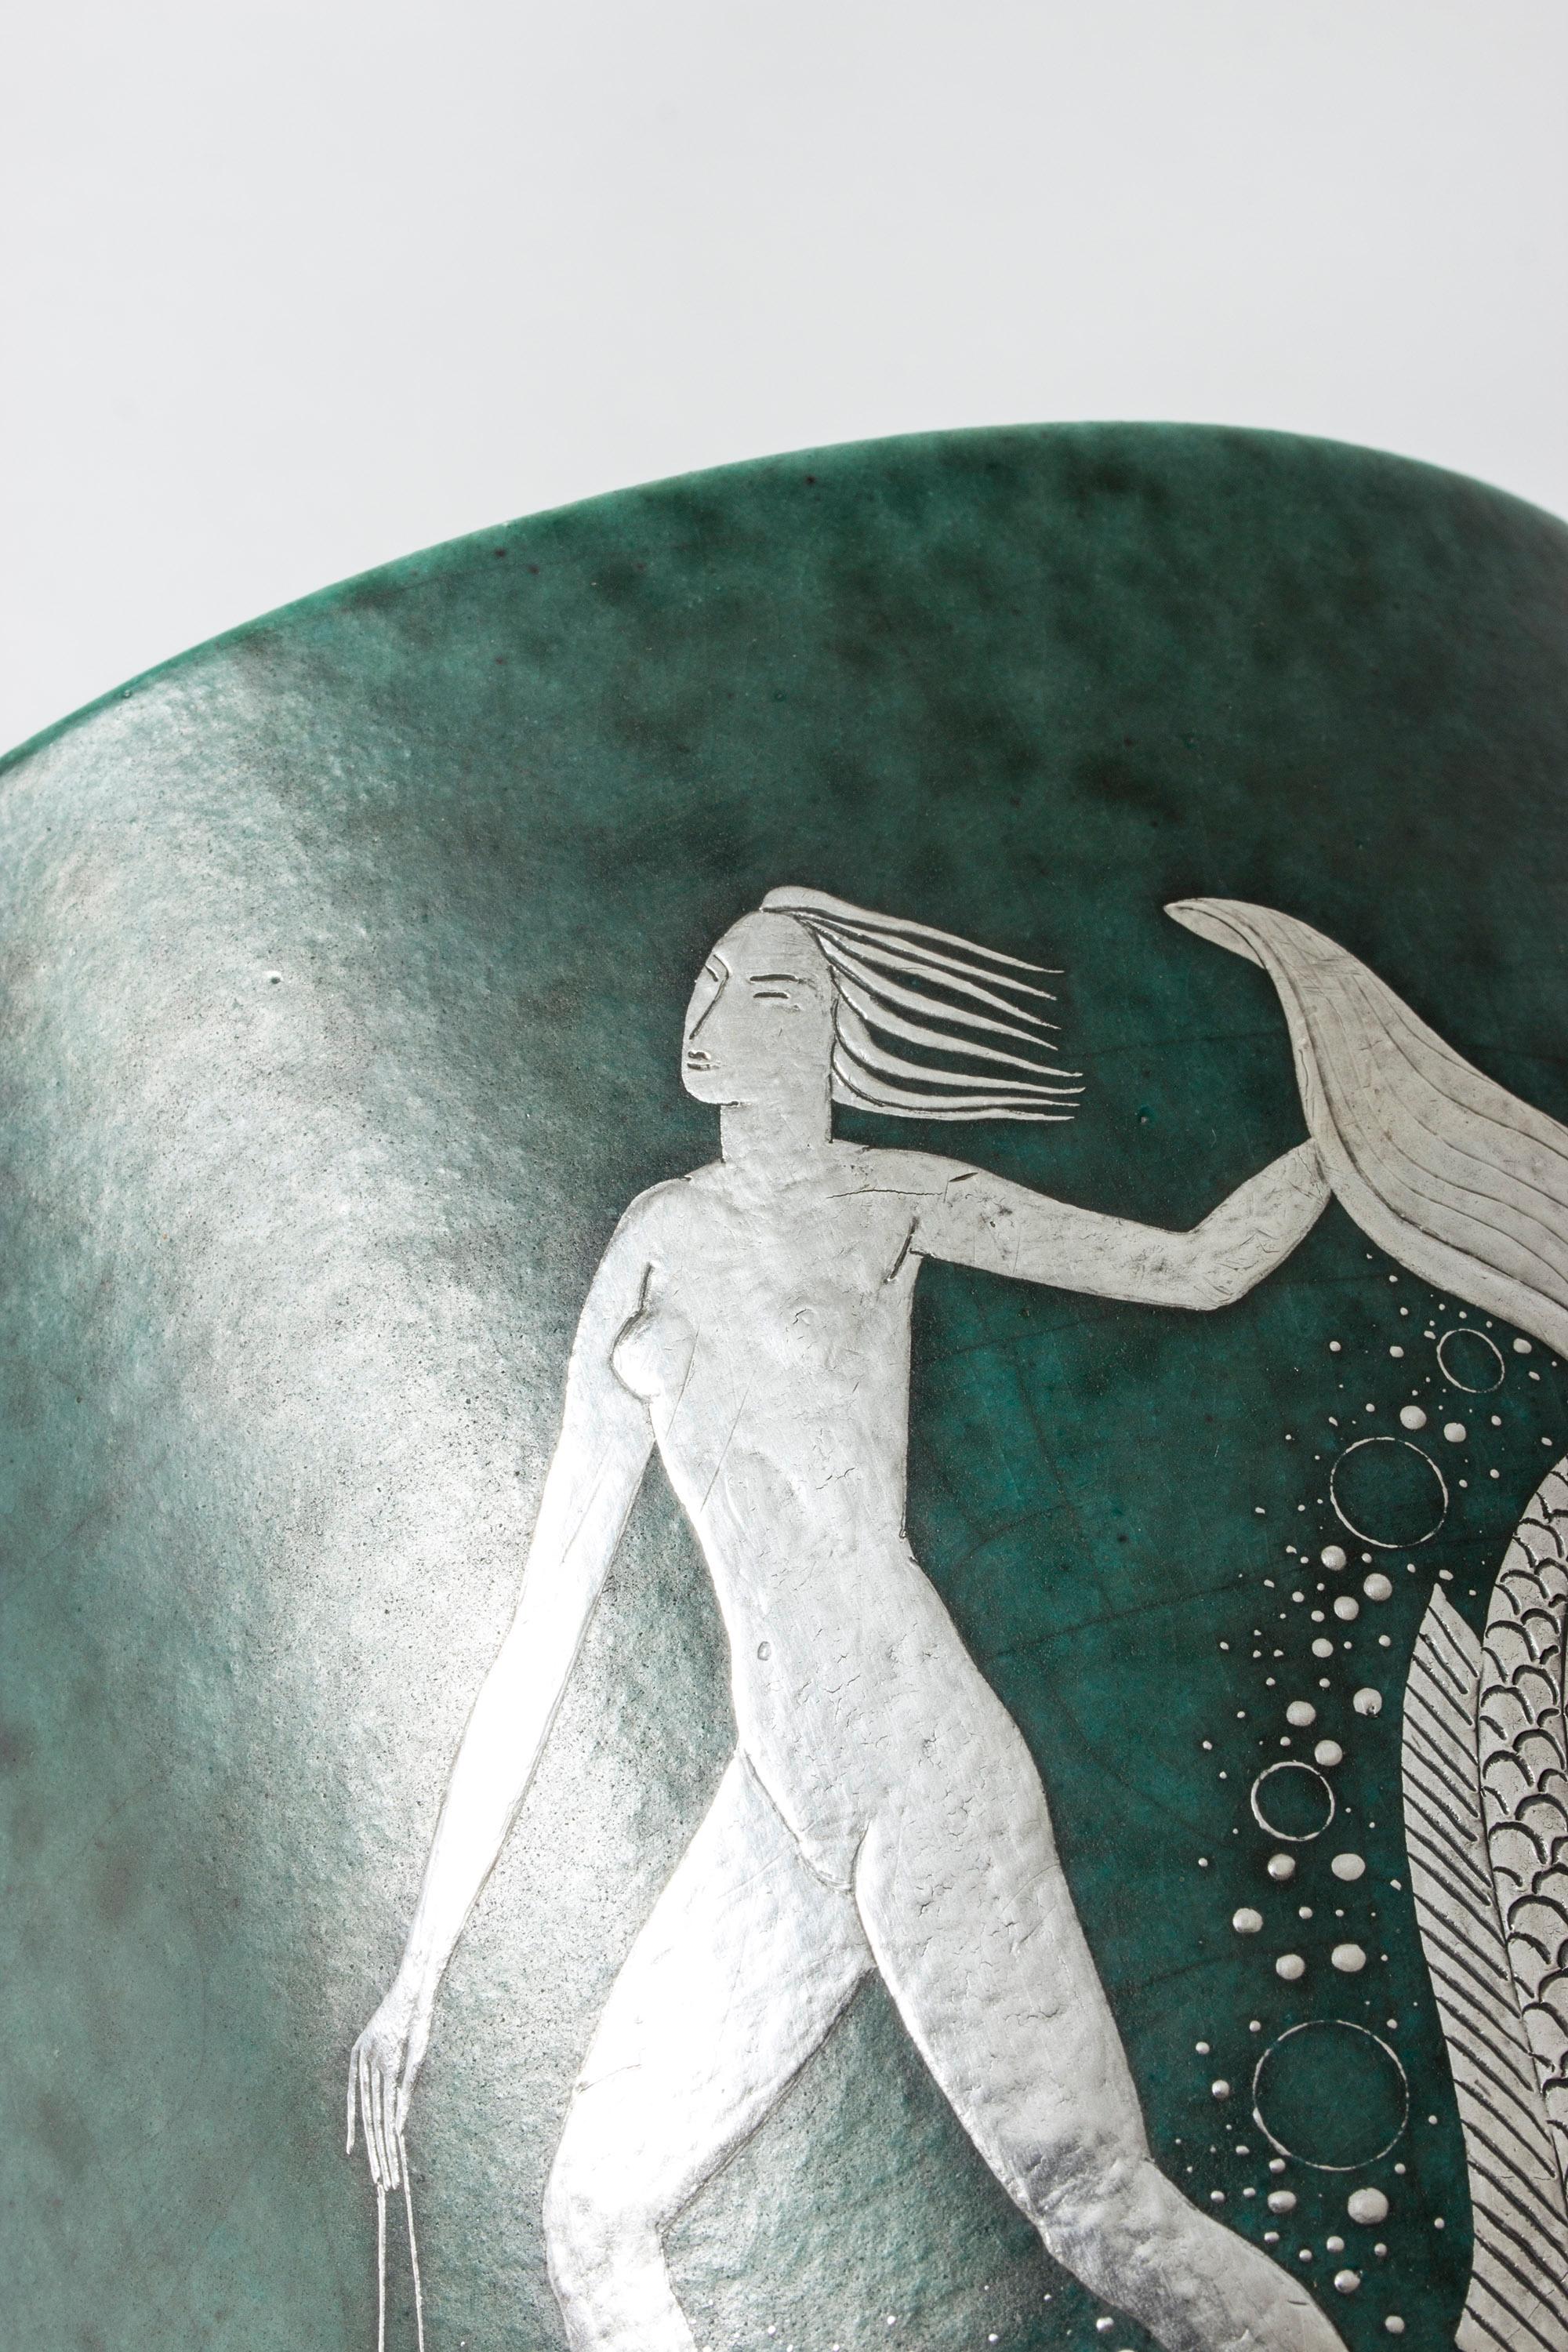 Ceramic Stoneware “Argenta” Vase by Wilhelm Kåge for Gustavsberg, Sweden, 1940s